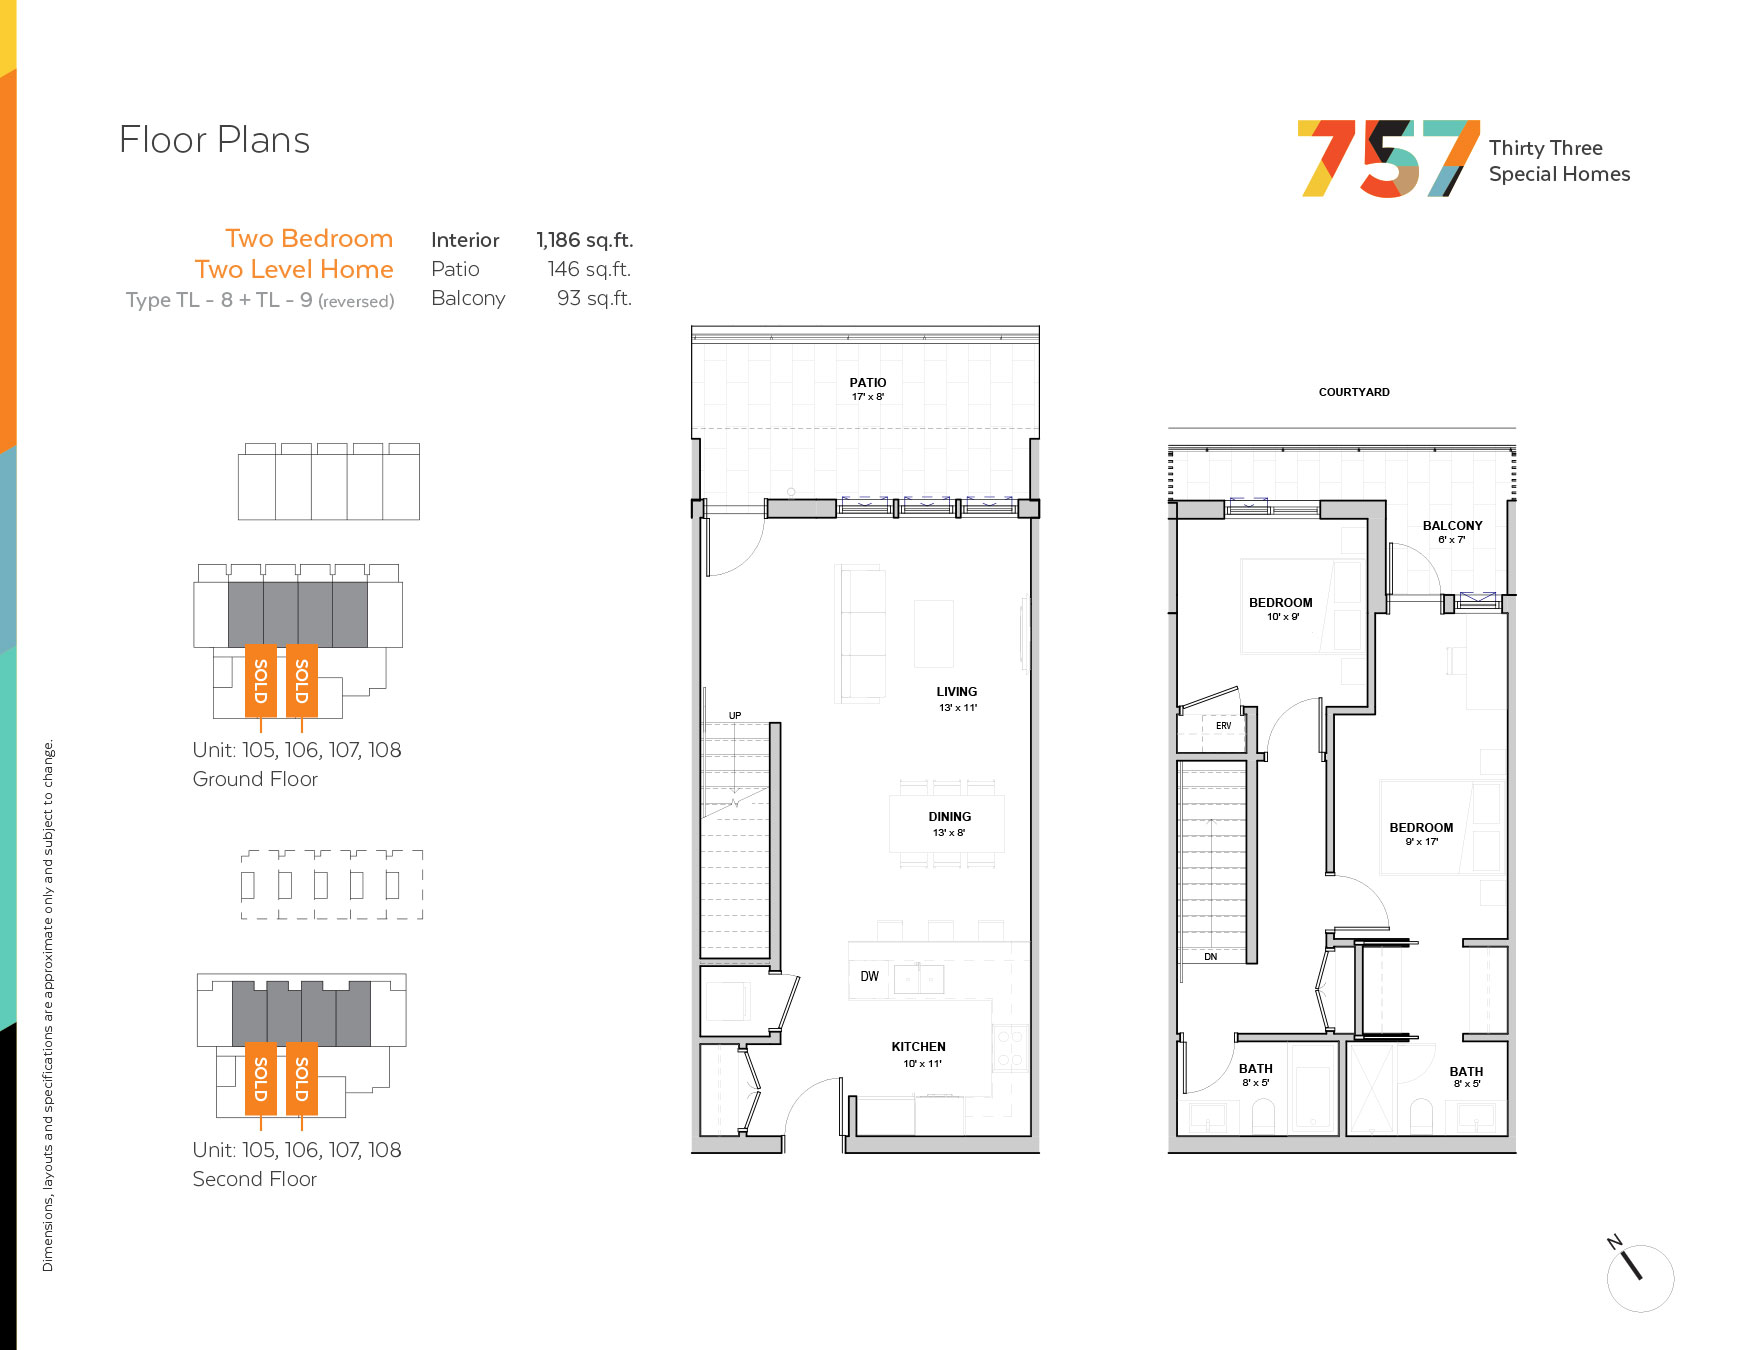 Two Bedroom Two Level Floor Plan